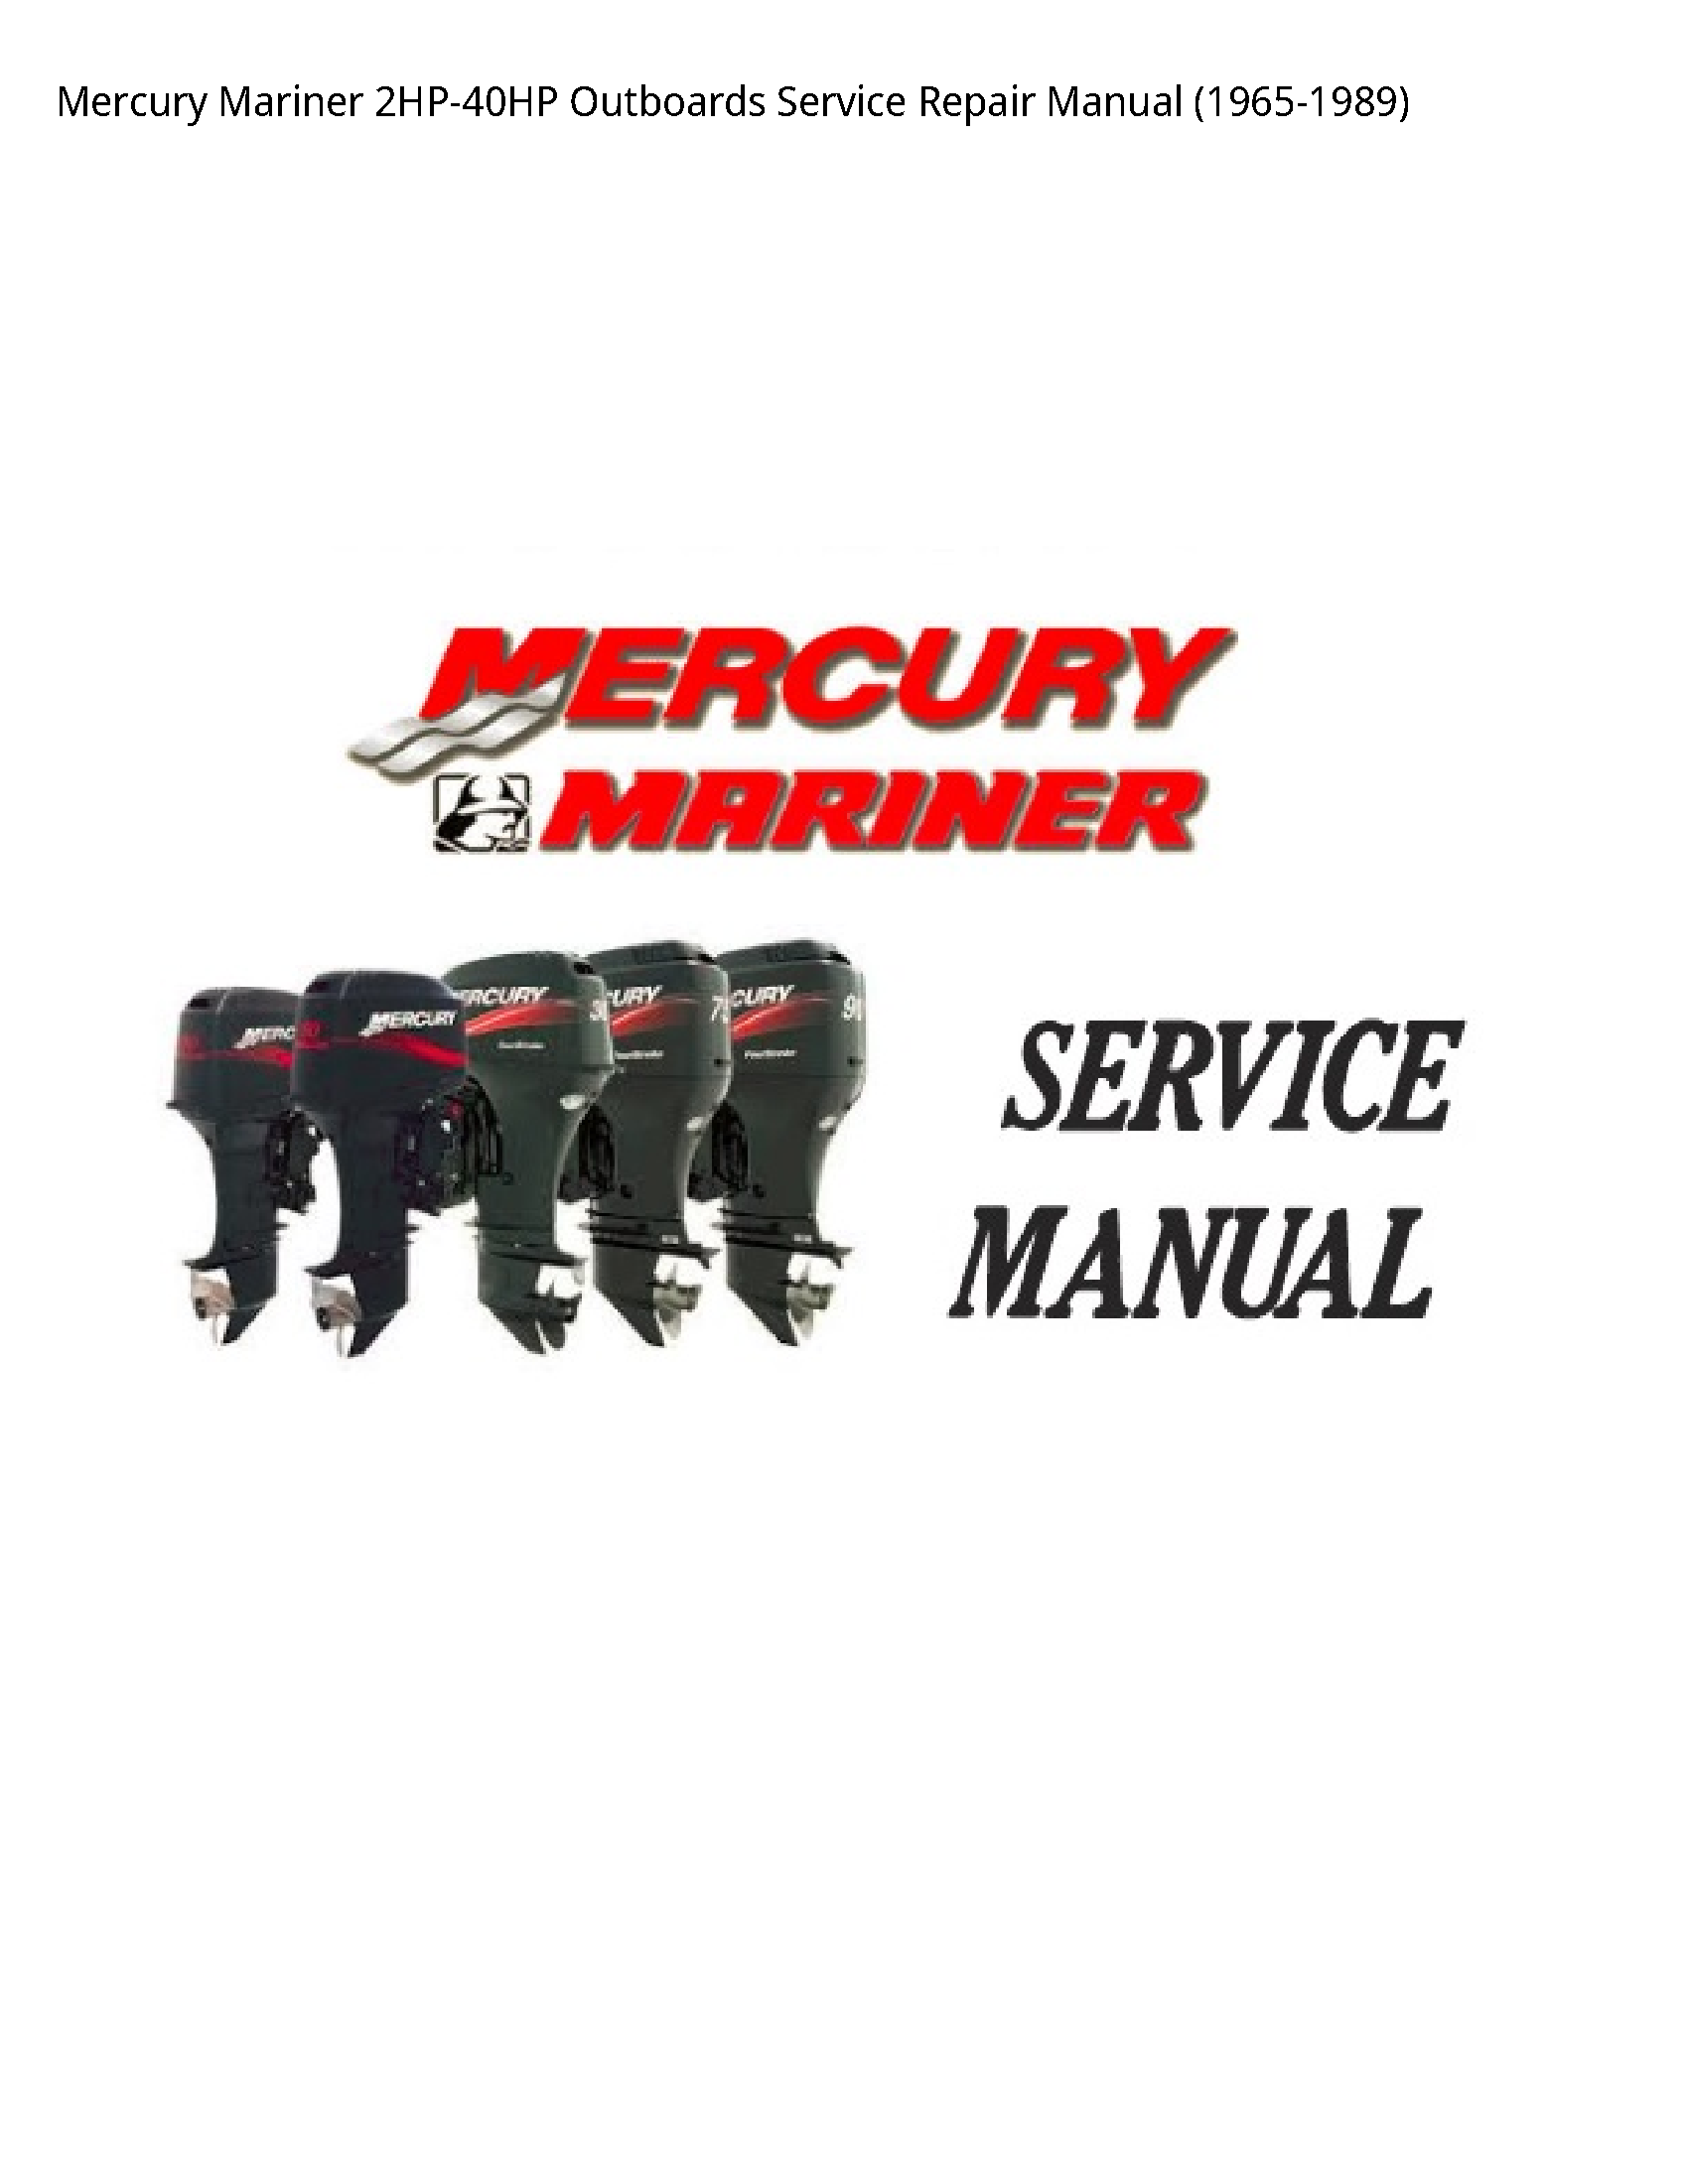 Mercury Mariner 2HP-40HP Outboards manual